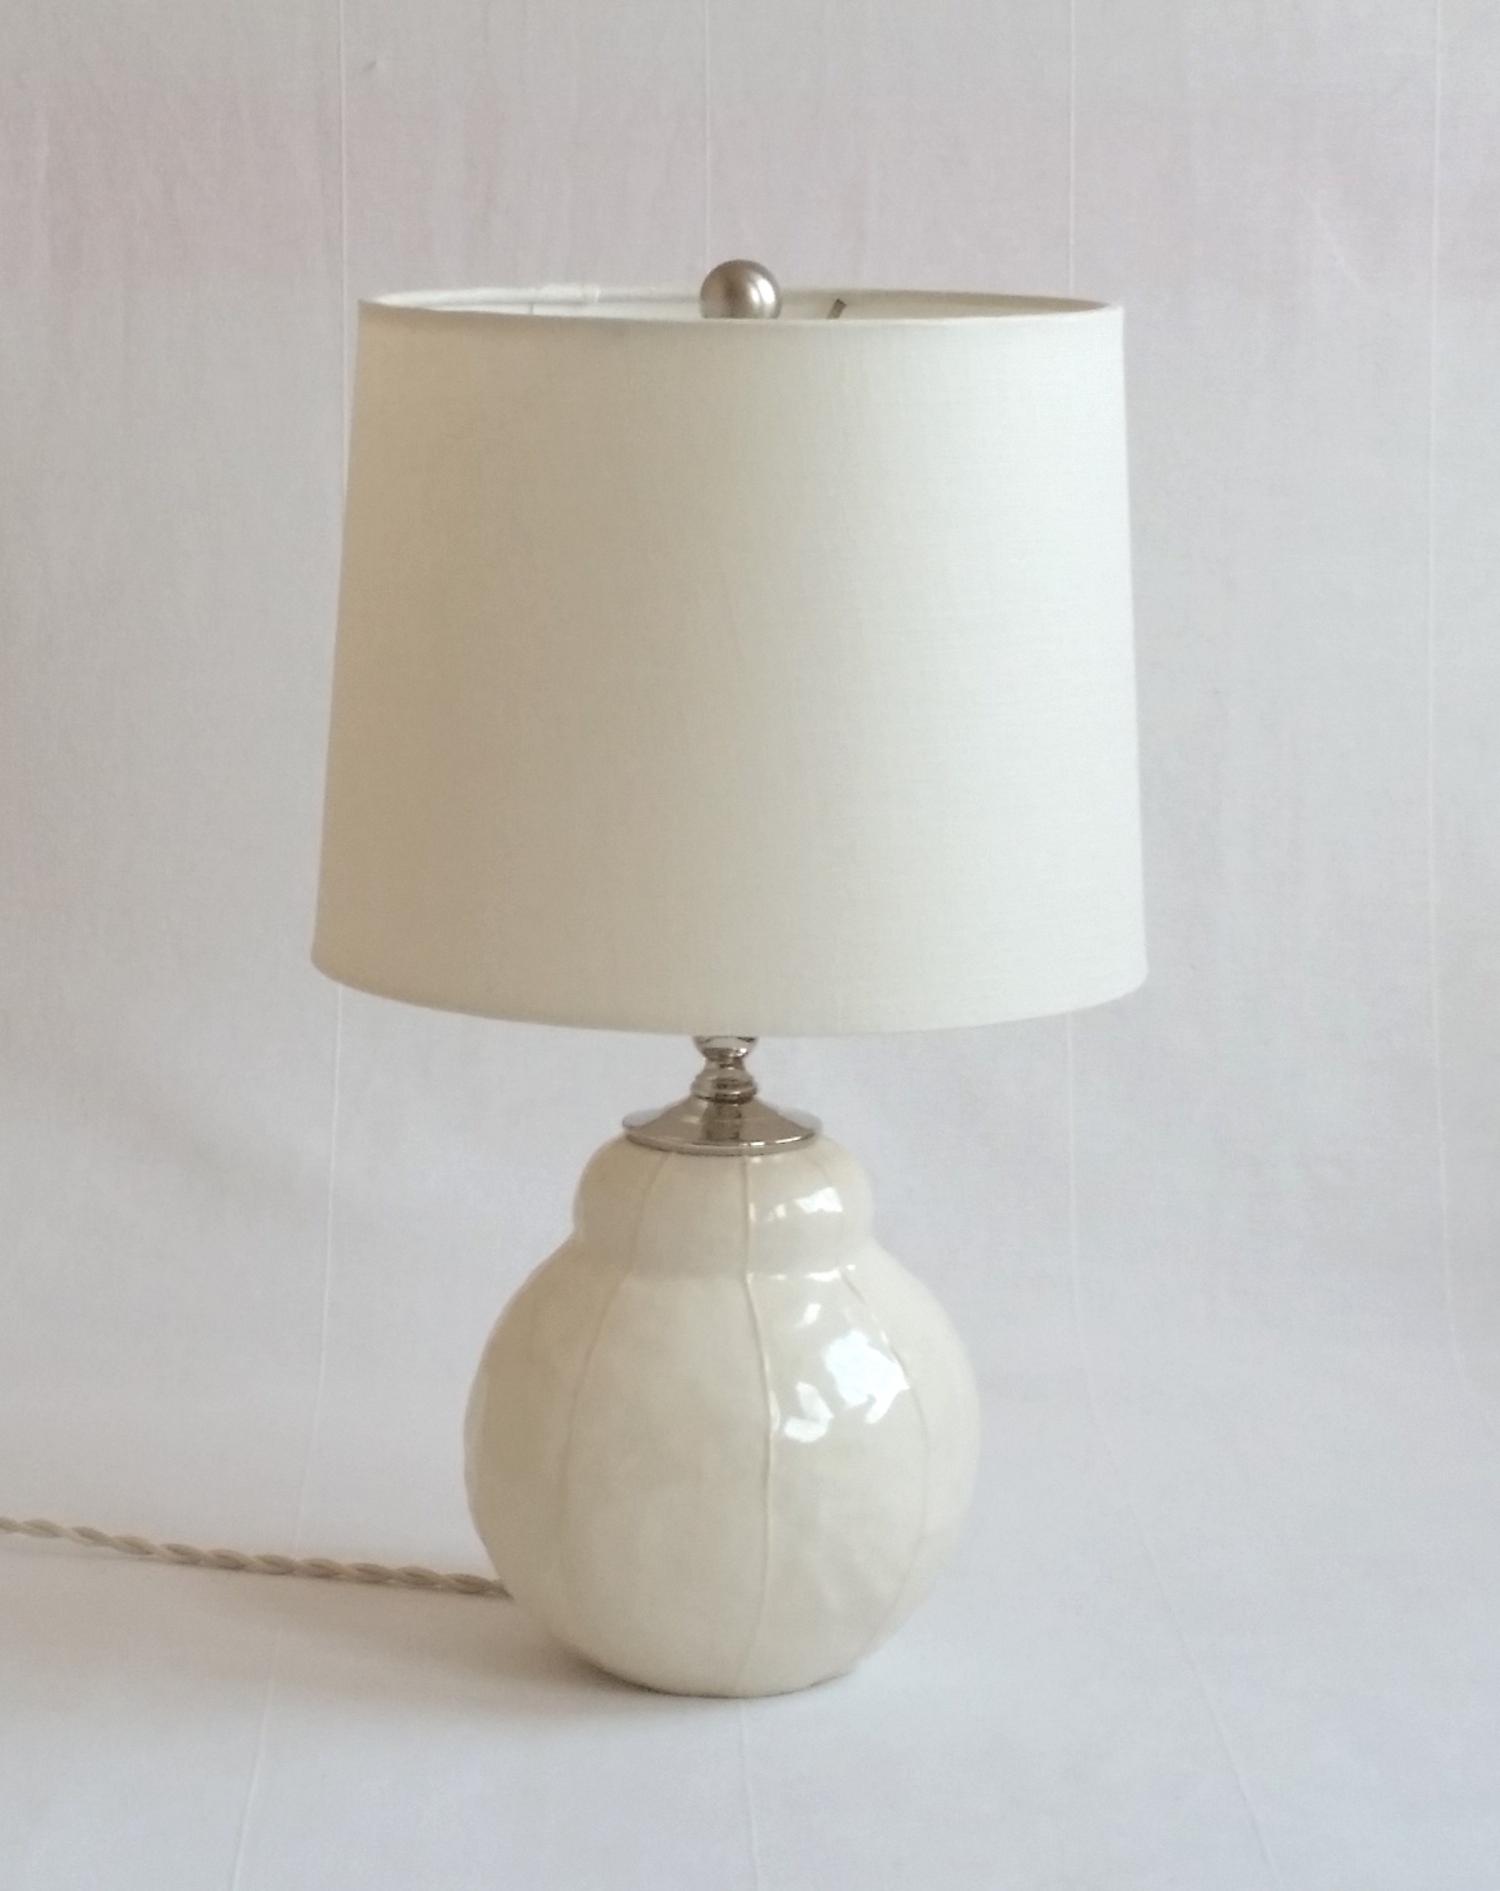 VIT ceramics Bubble lamp, drum shade, white, contemporary pottery lamp base, modern, handmade, Kri Kri Studio, Seattle